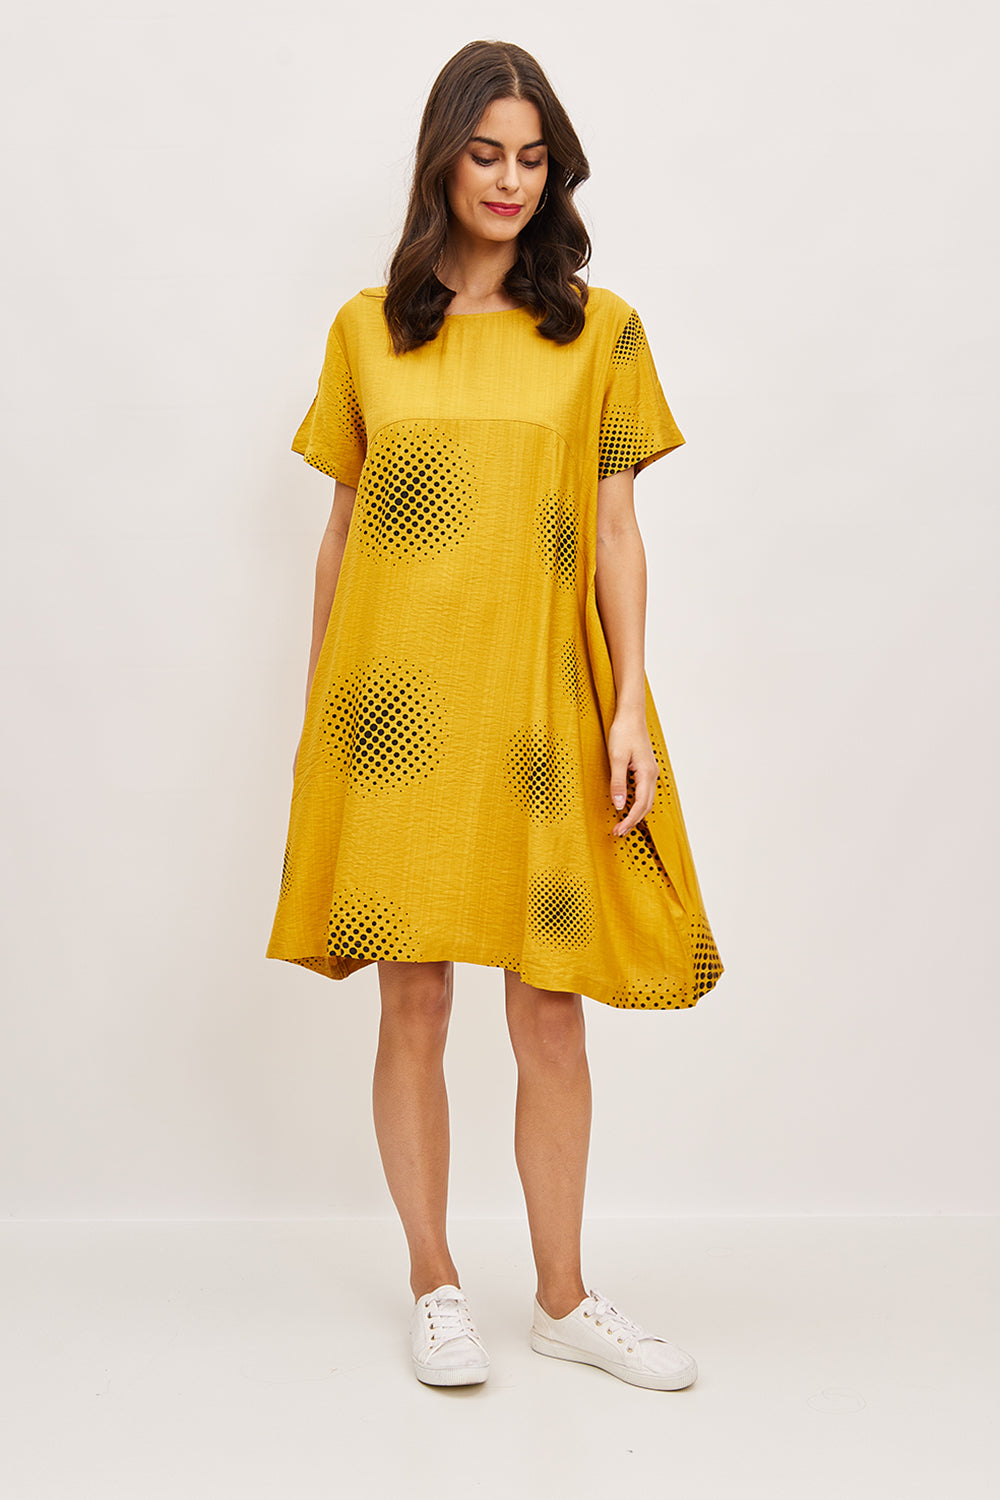 Dotted pattern short dress